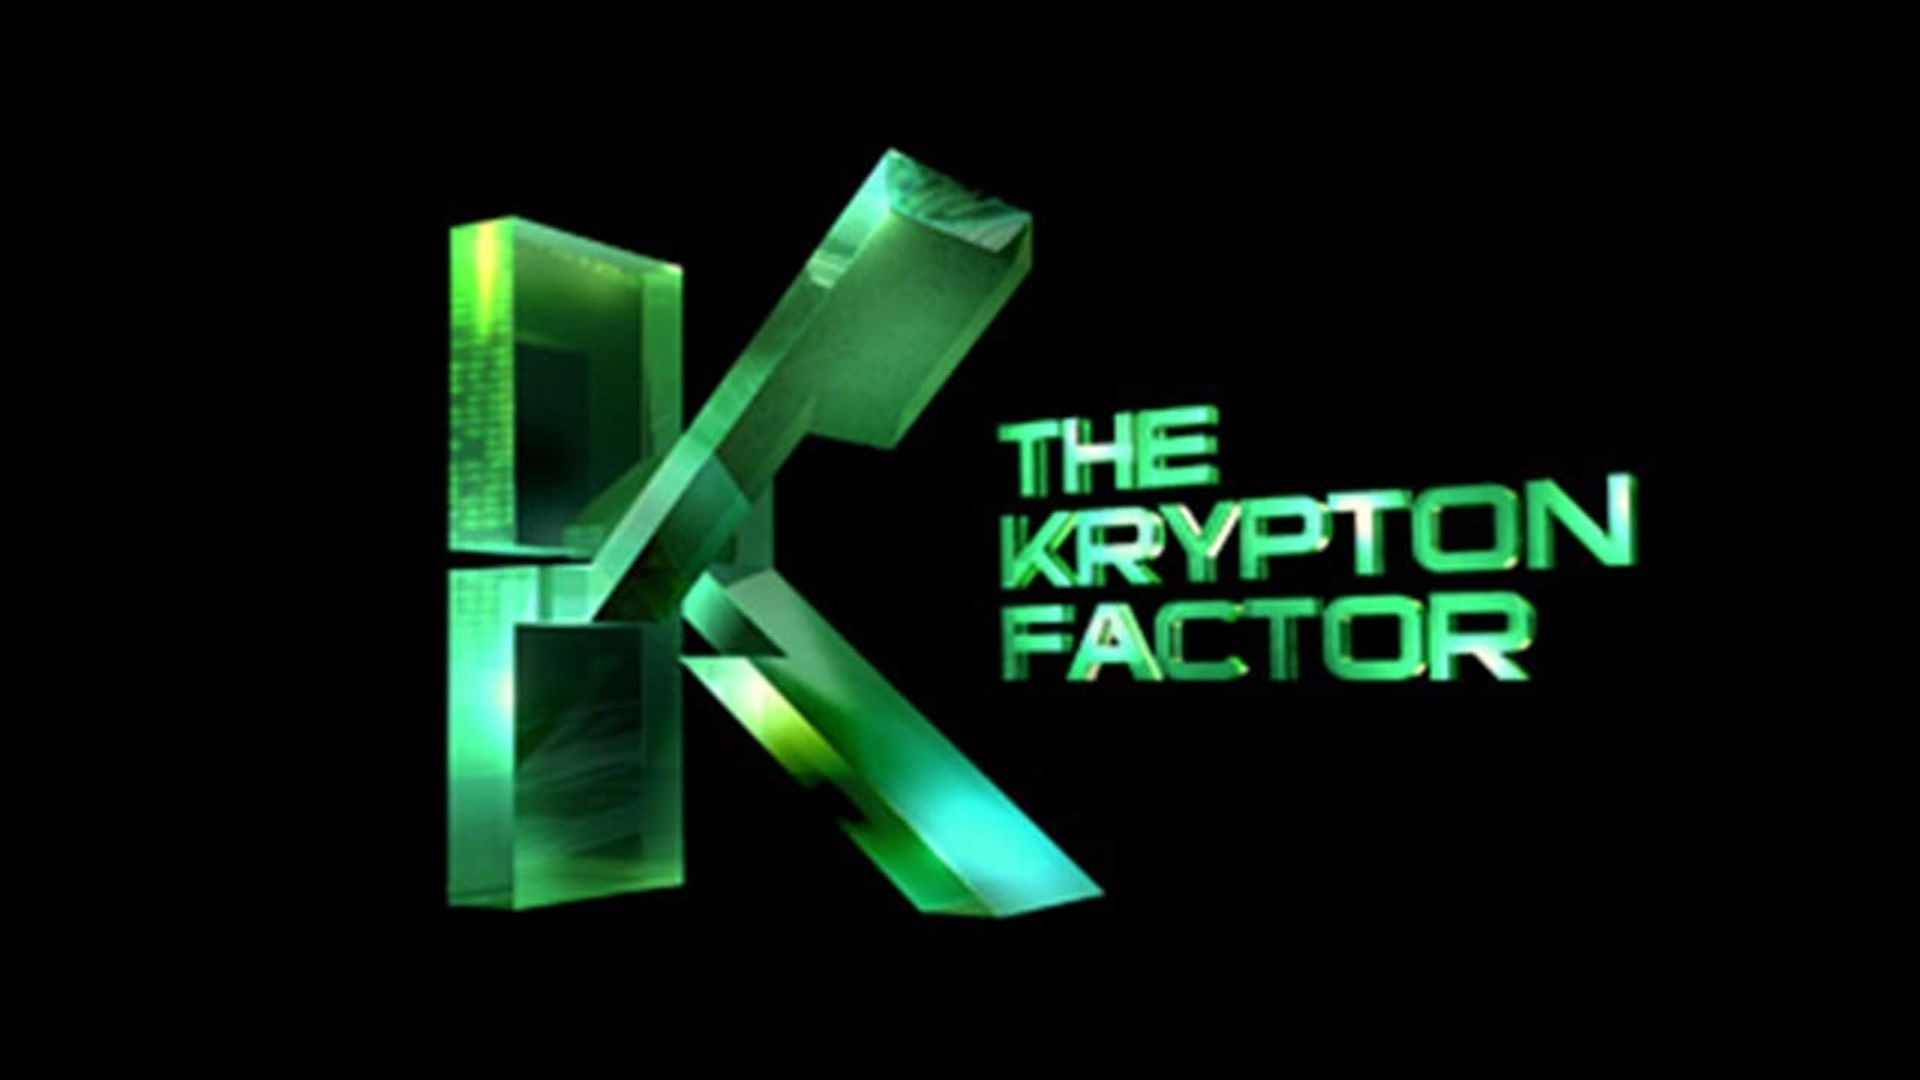 The Krypton Factor background